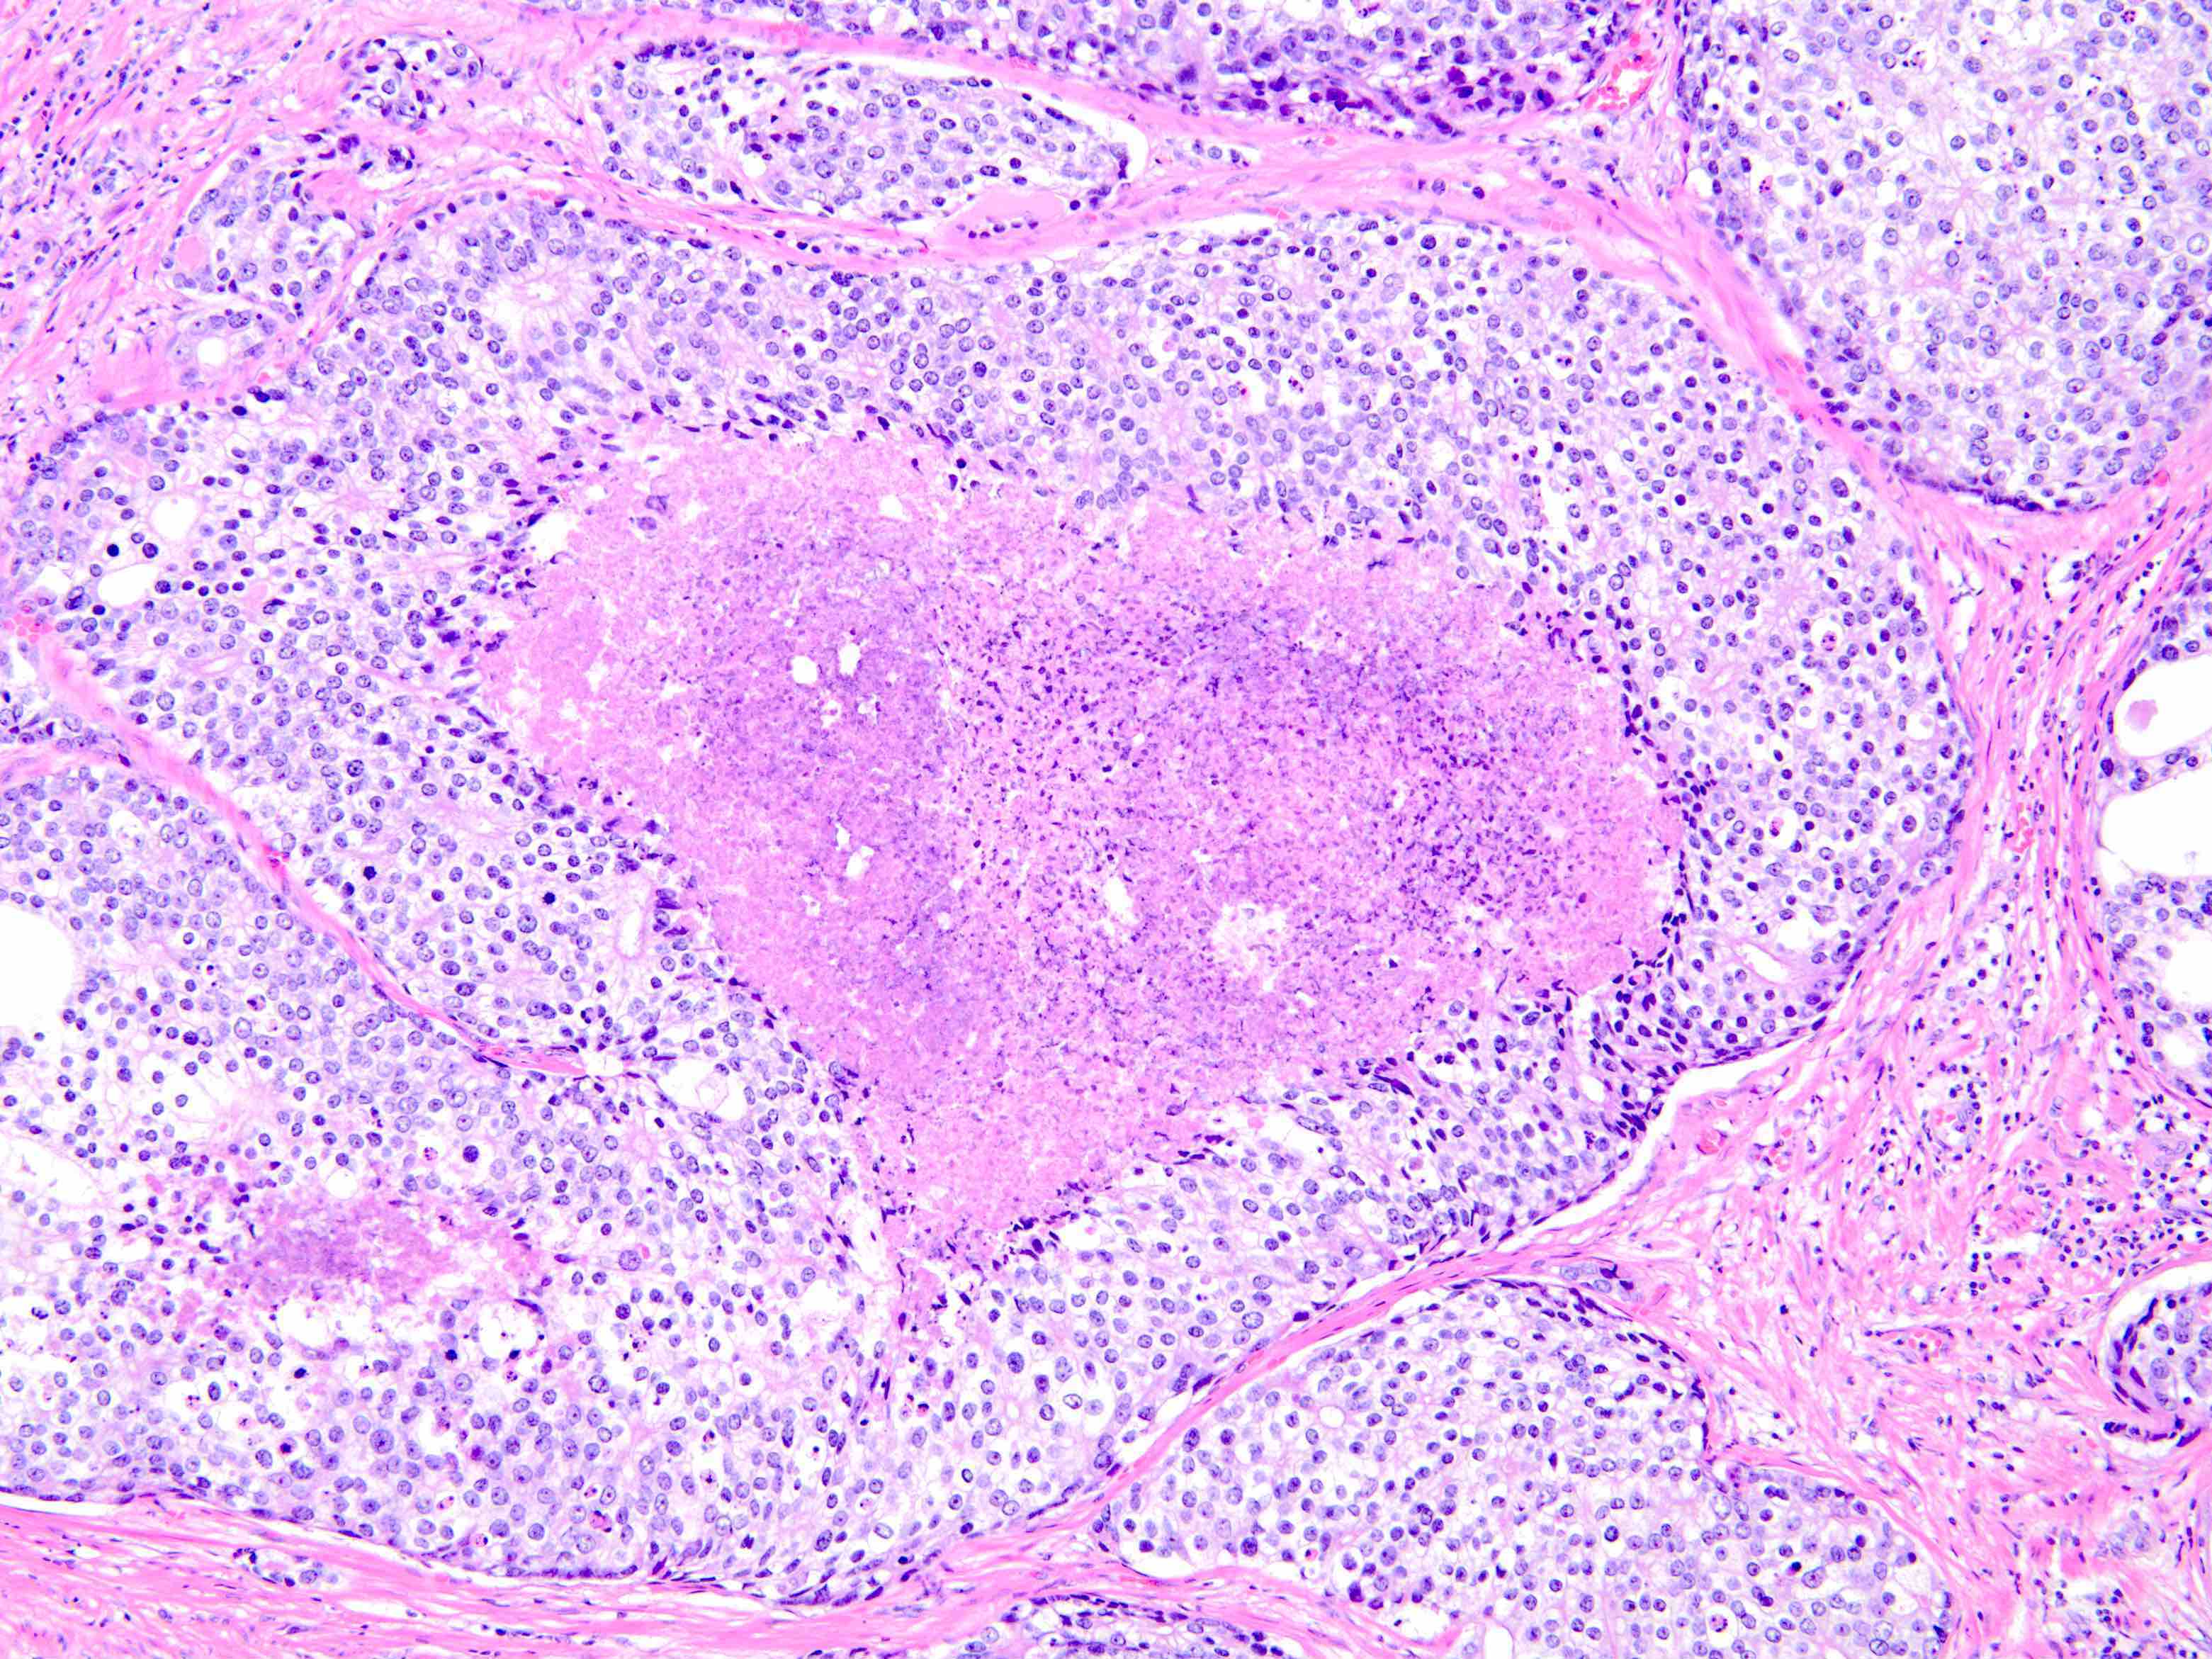 urothelial carcinoma prostate pathology outlines